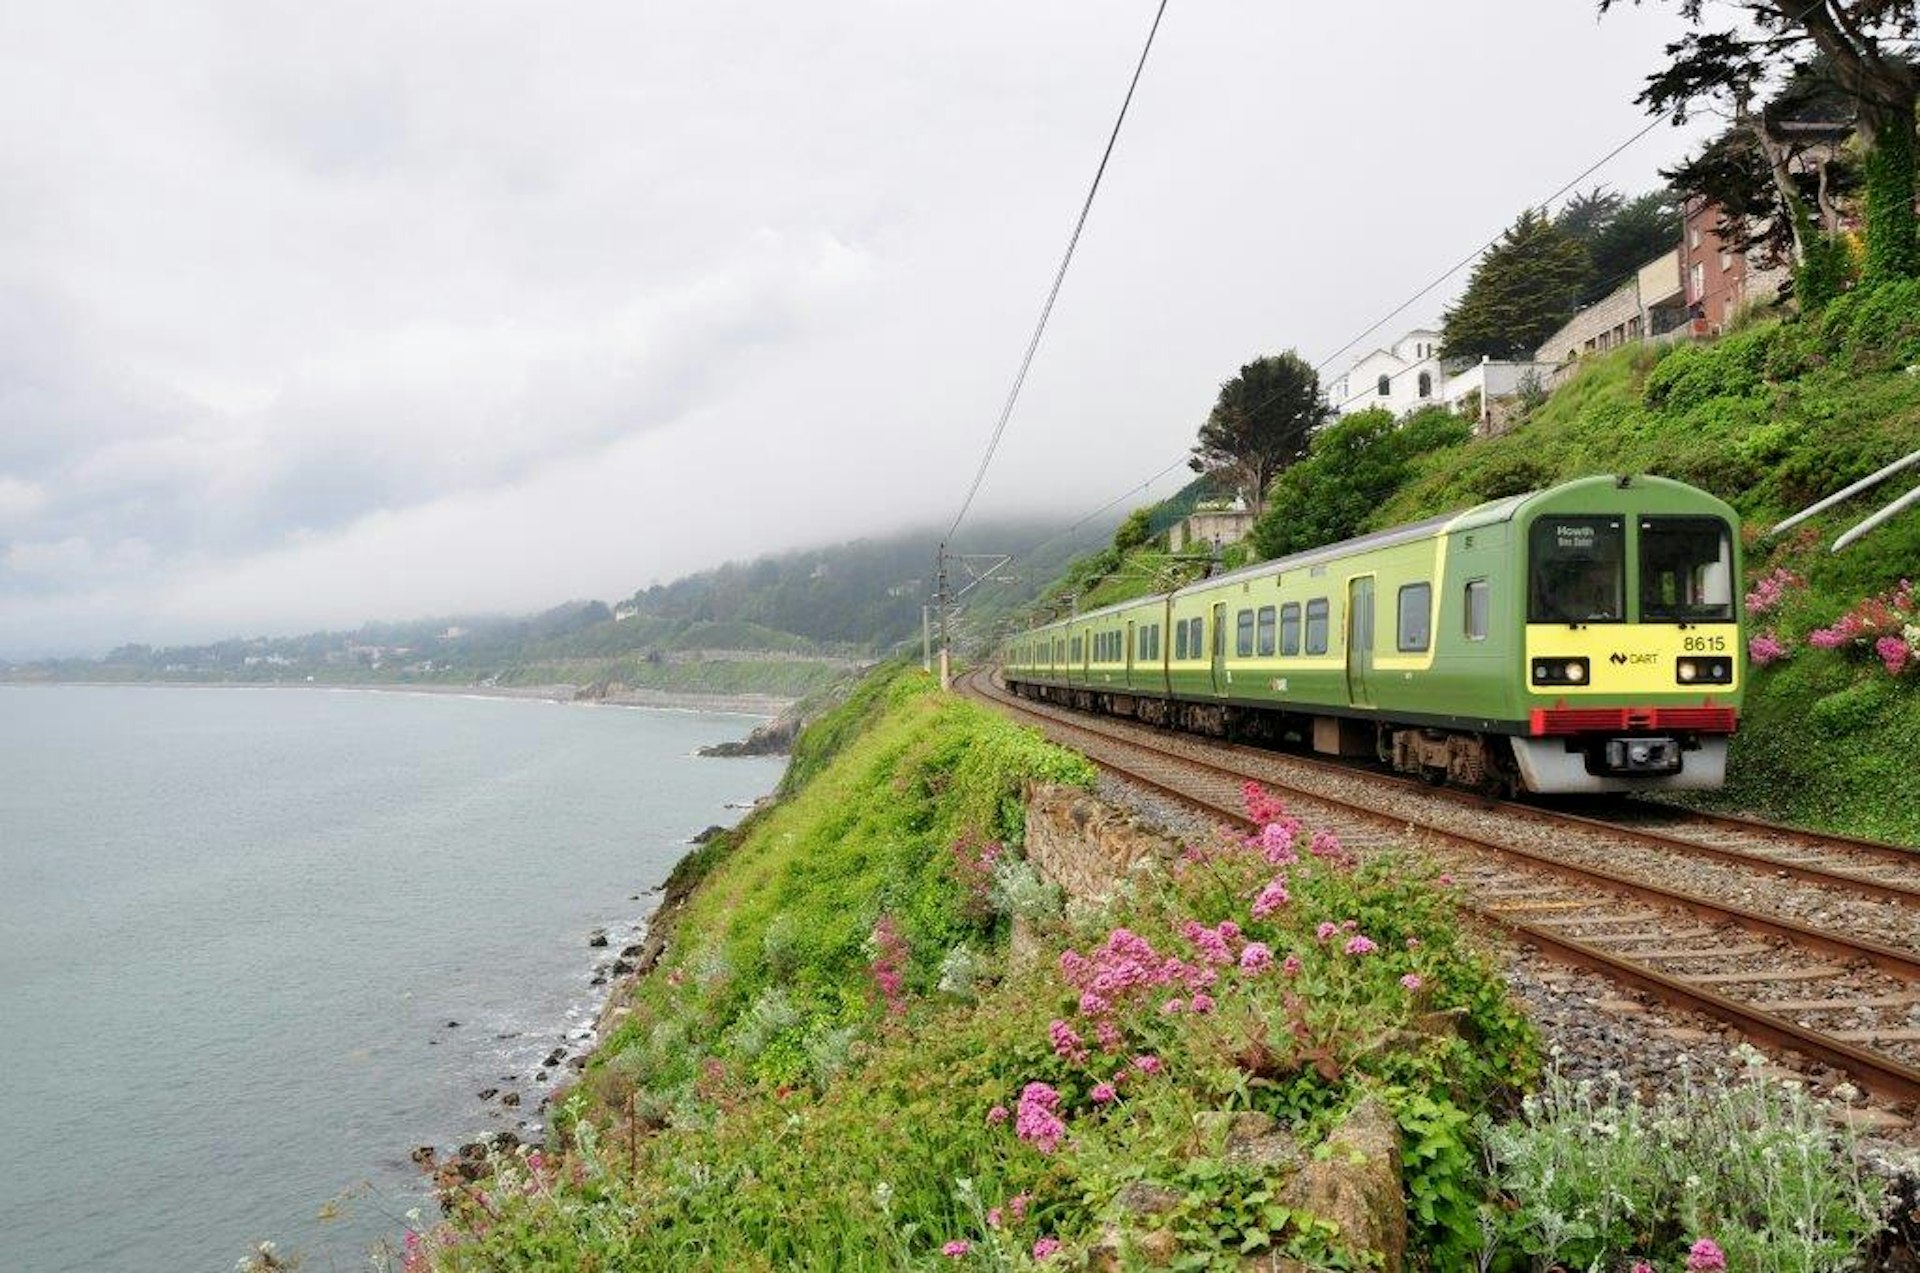 A train follows a scenic route by the sea